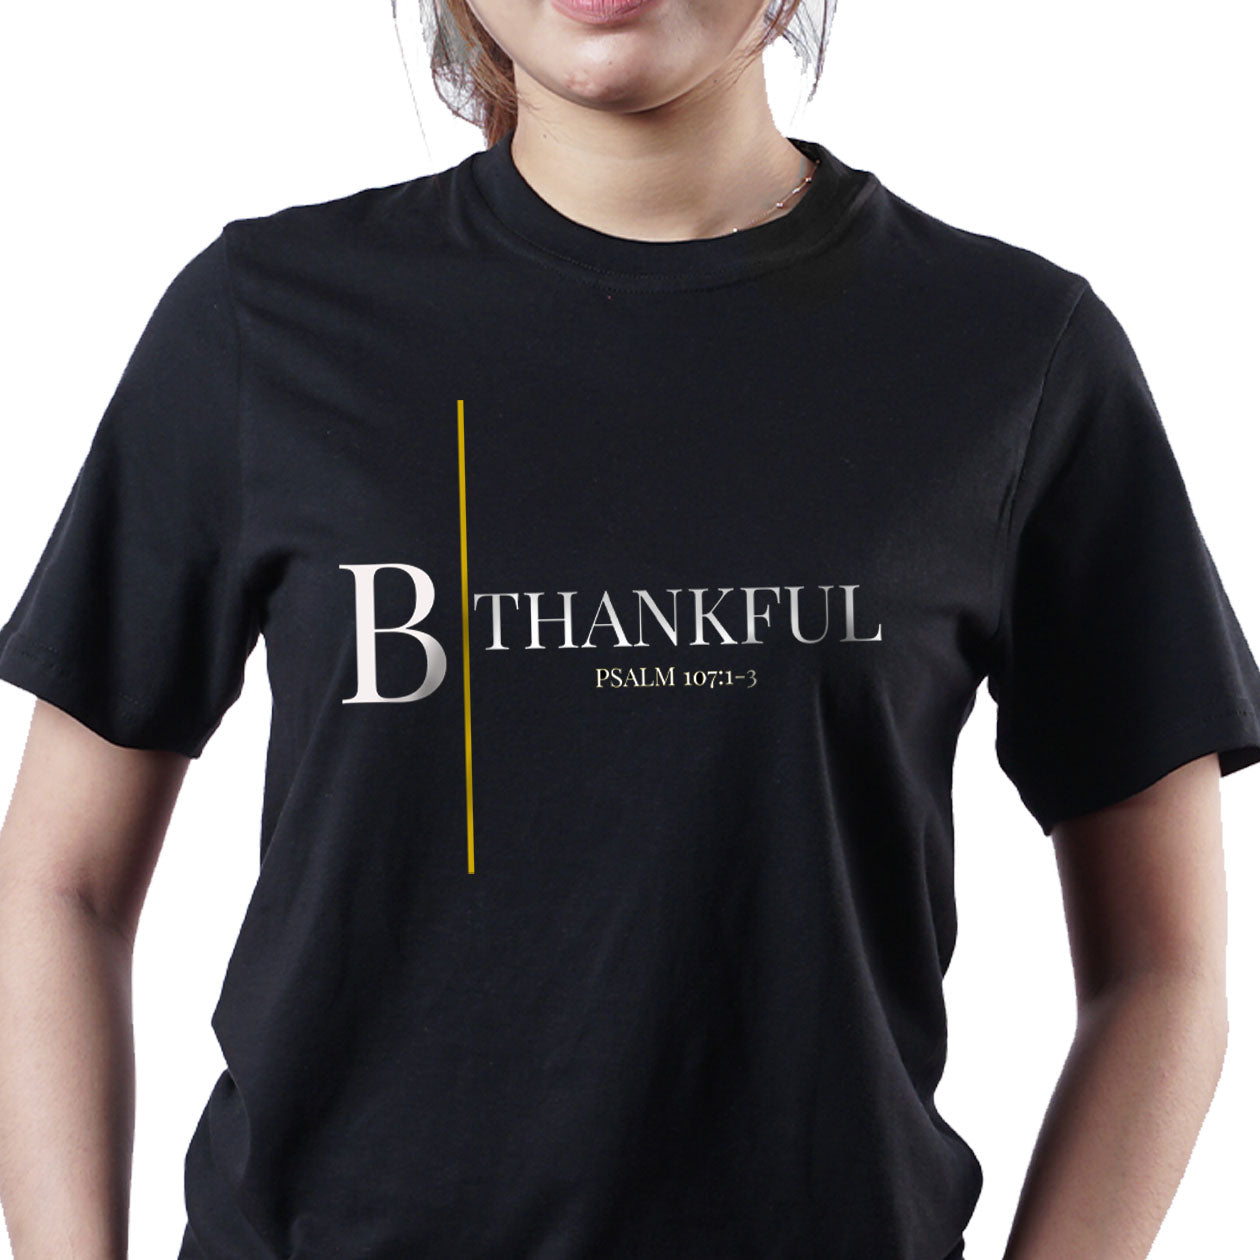 The B|TEE: Thankful